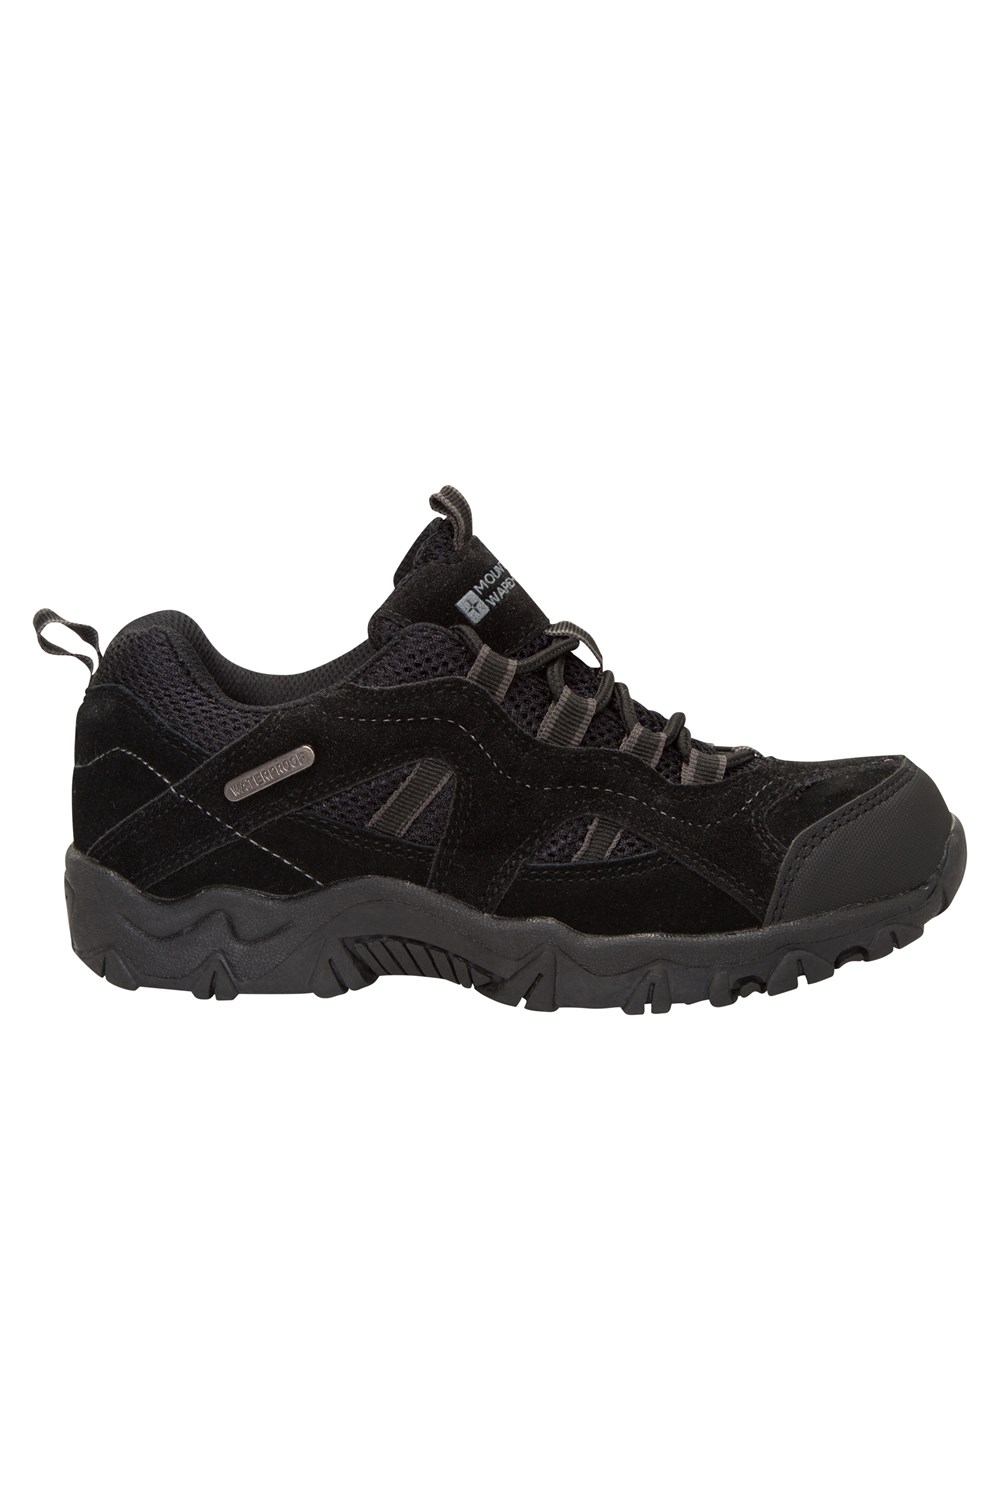 Mountain Warehouse Walking Shoes Stampede Kids Waterproof Suede and ...